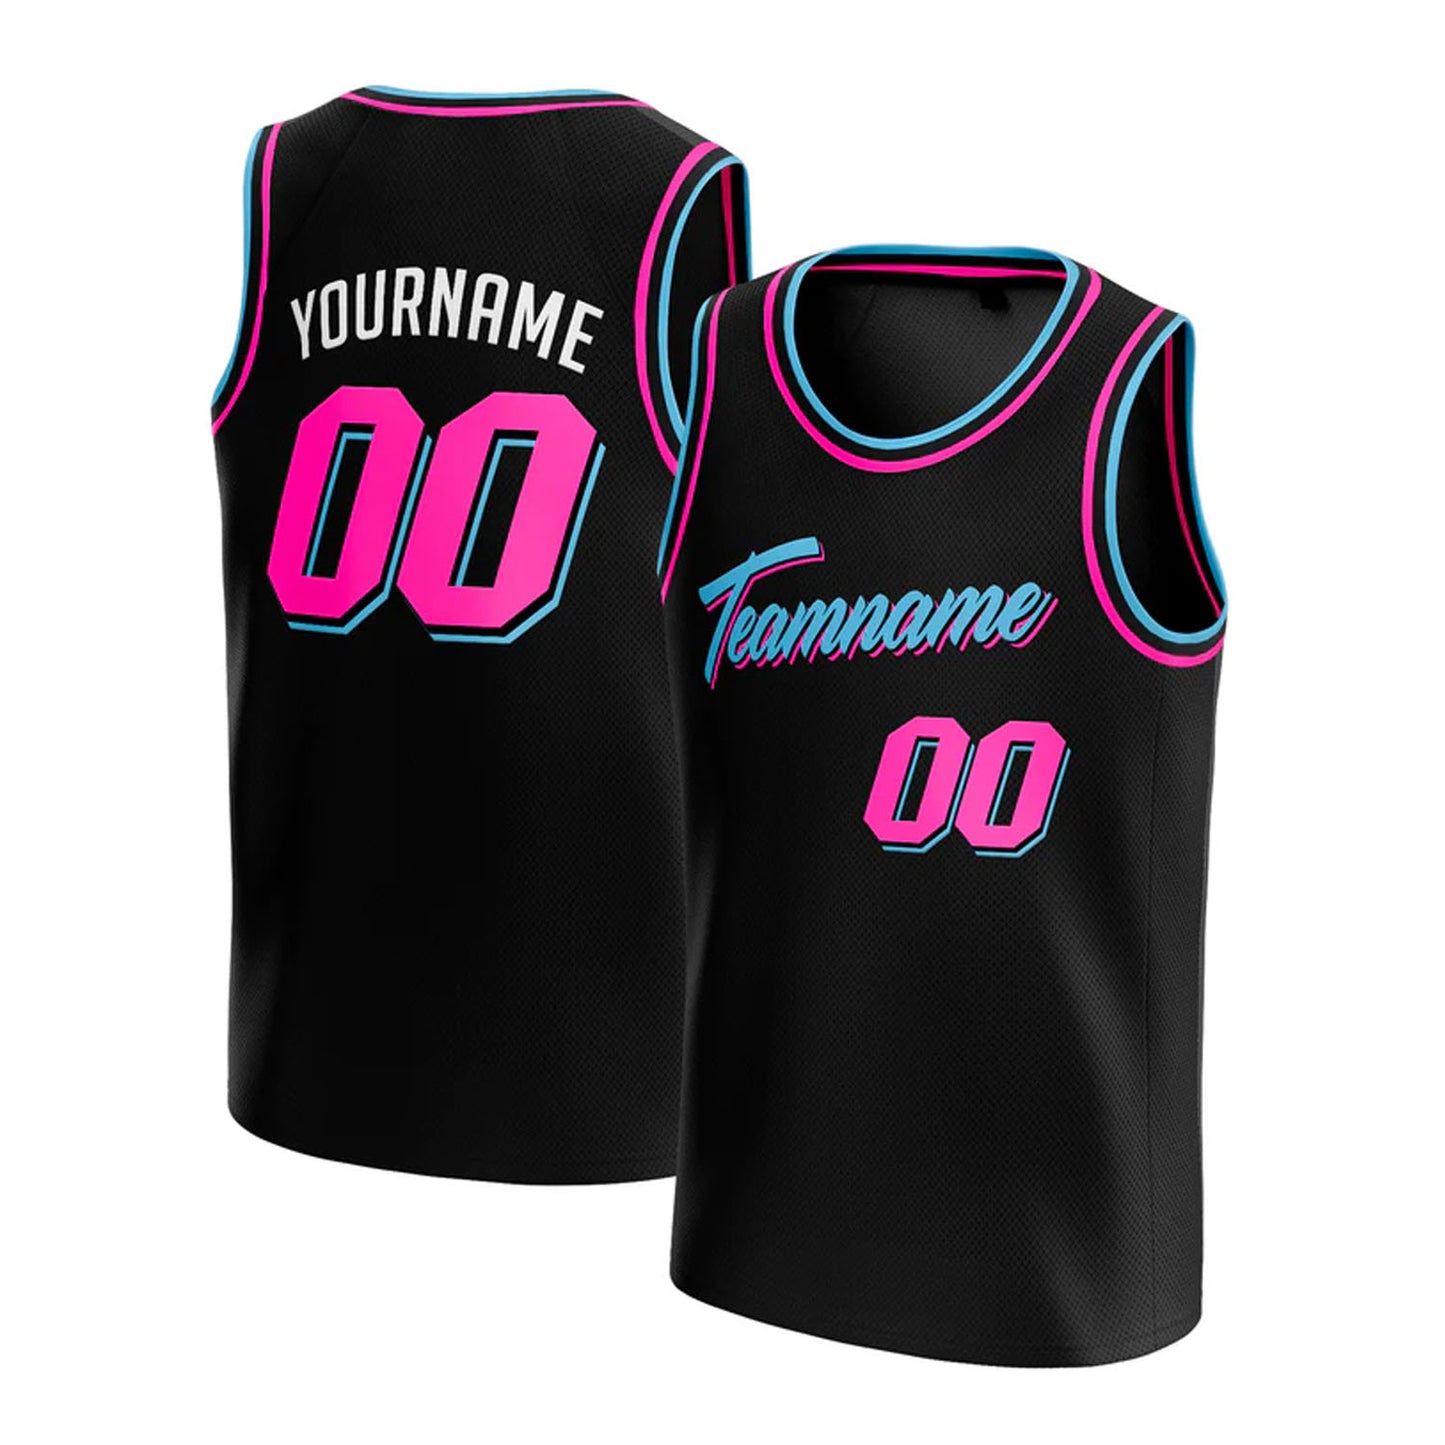 Vice City Custom Basketball Jersey